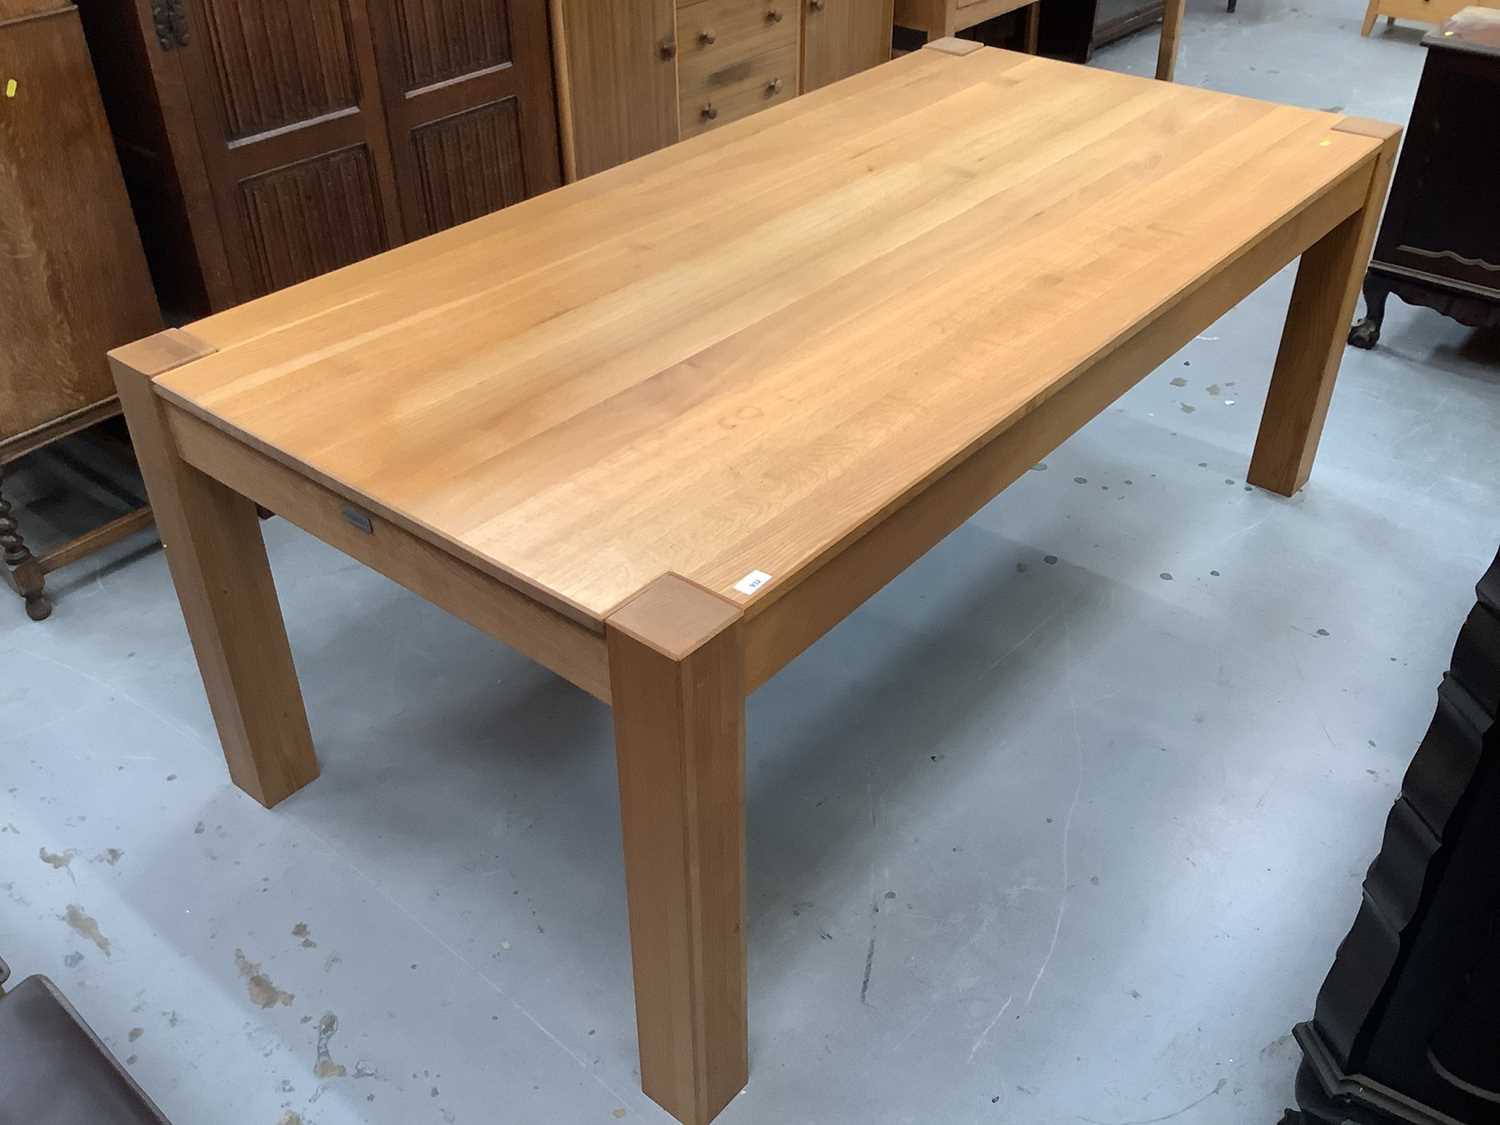 Lot 932 - Good quality light oak dining table bearing label - John Laurence, Fine Wooden Furniture, 200.5cm x 99cm x 88.5cm high